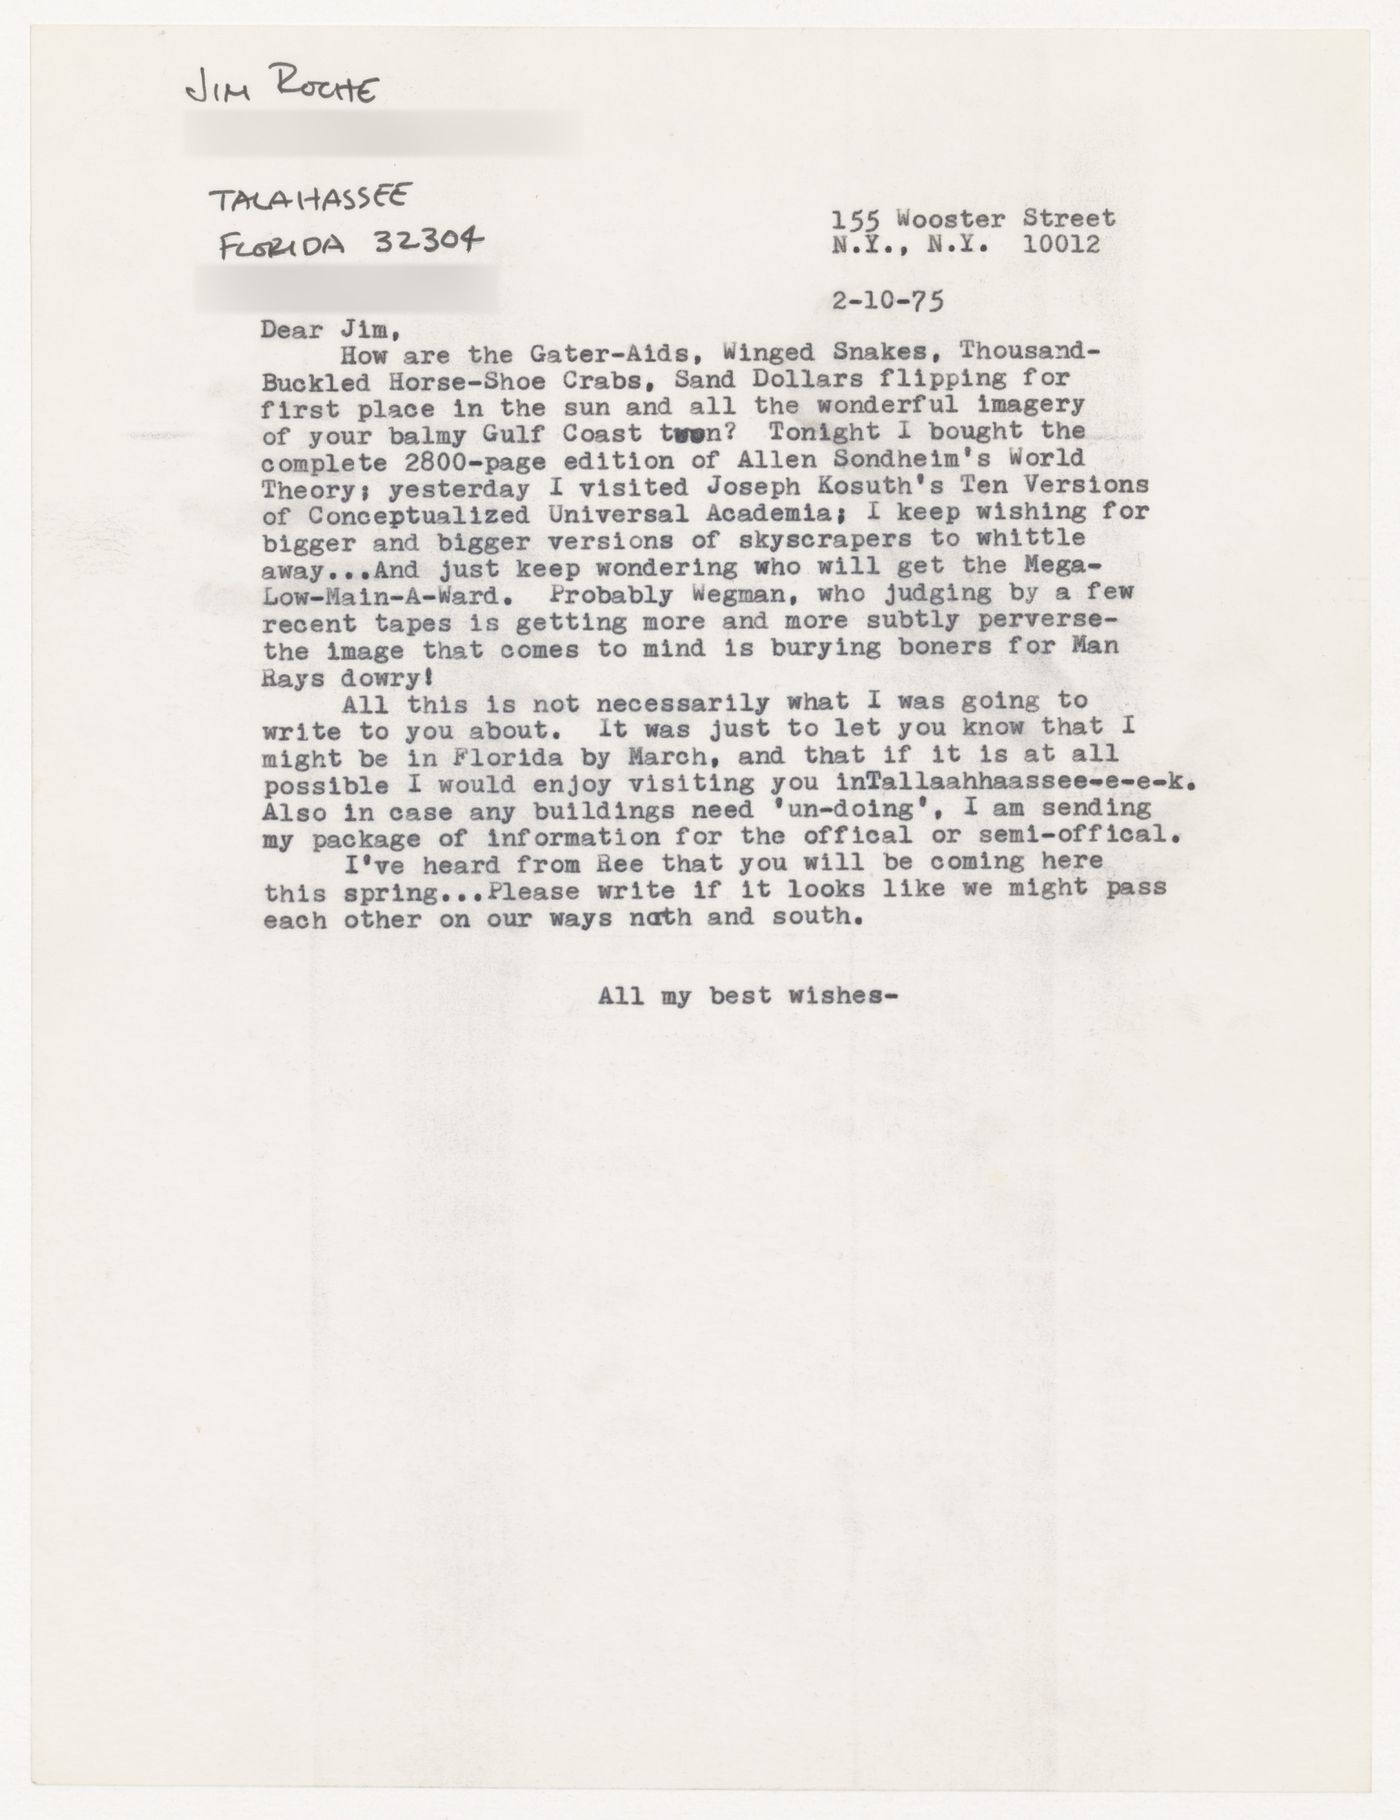 Letter from Gordon Matta-Clark to Jim Roche